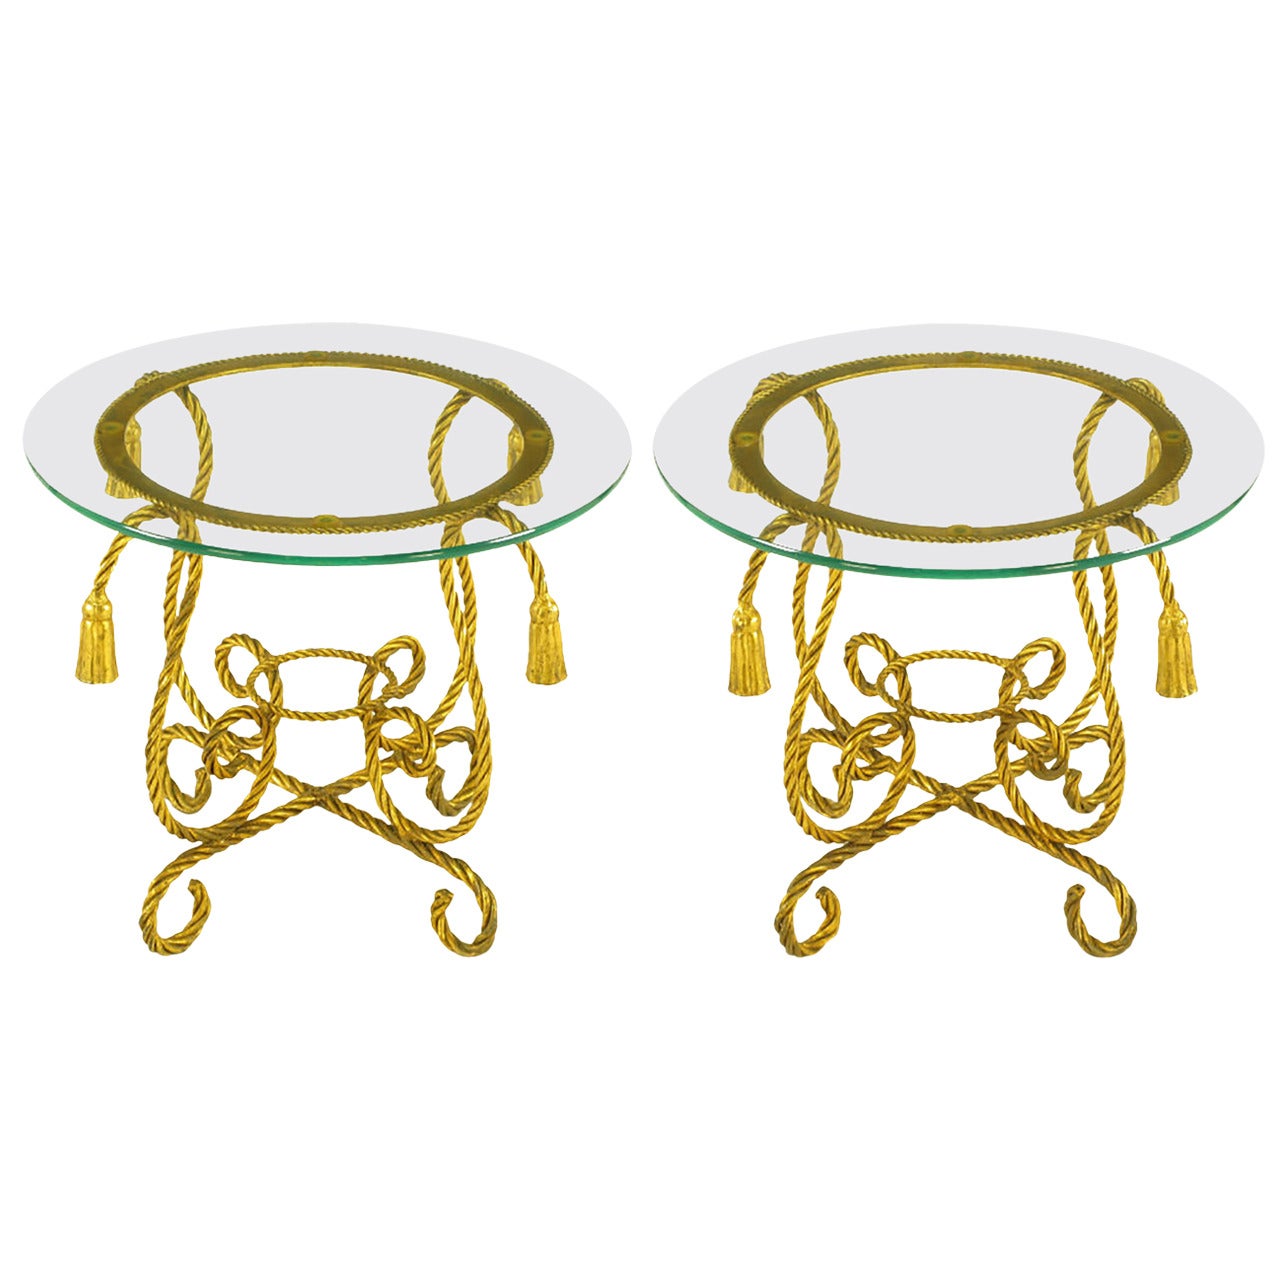 Pair of Italian Gilt Iron Rope Tables with Tassel Ornamentation